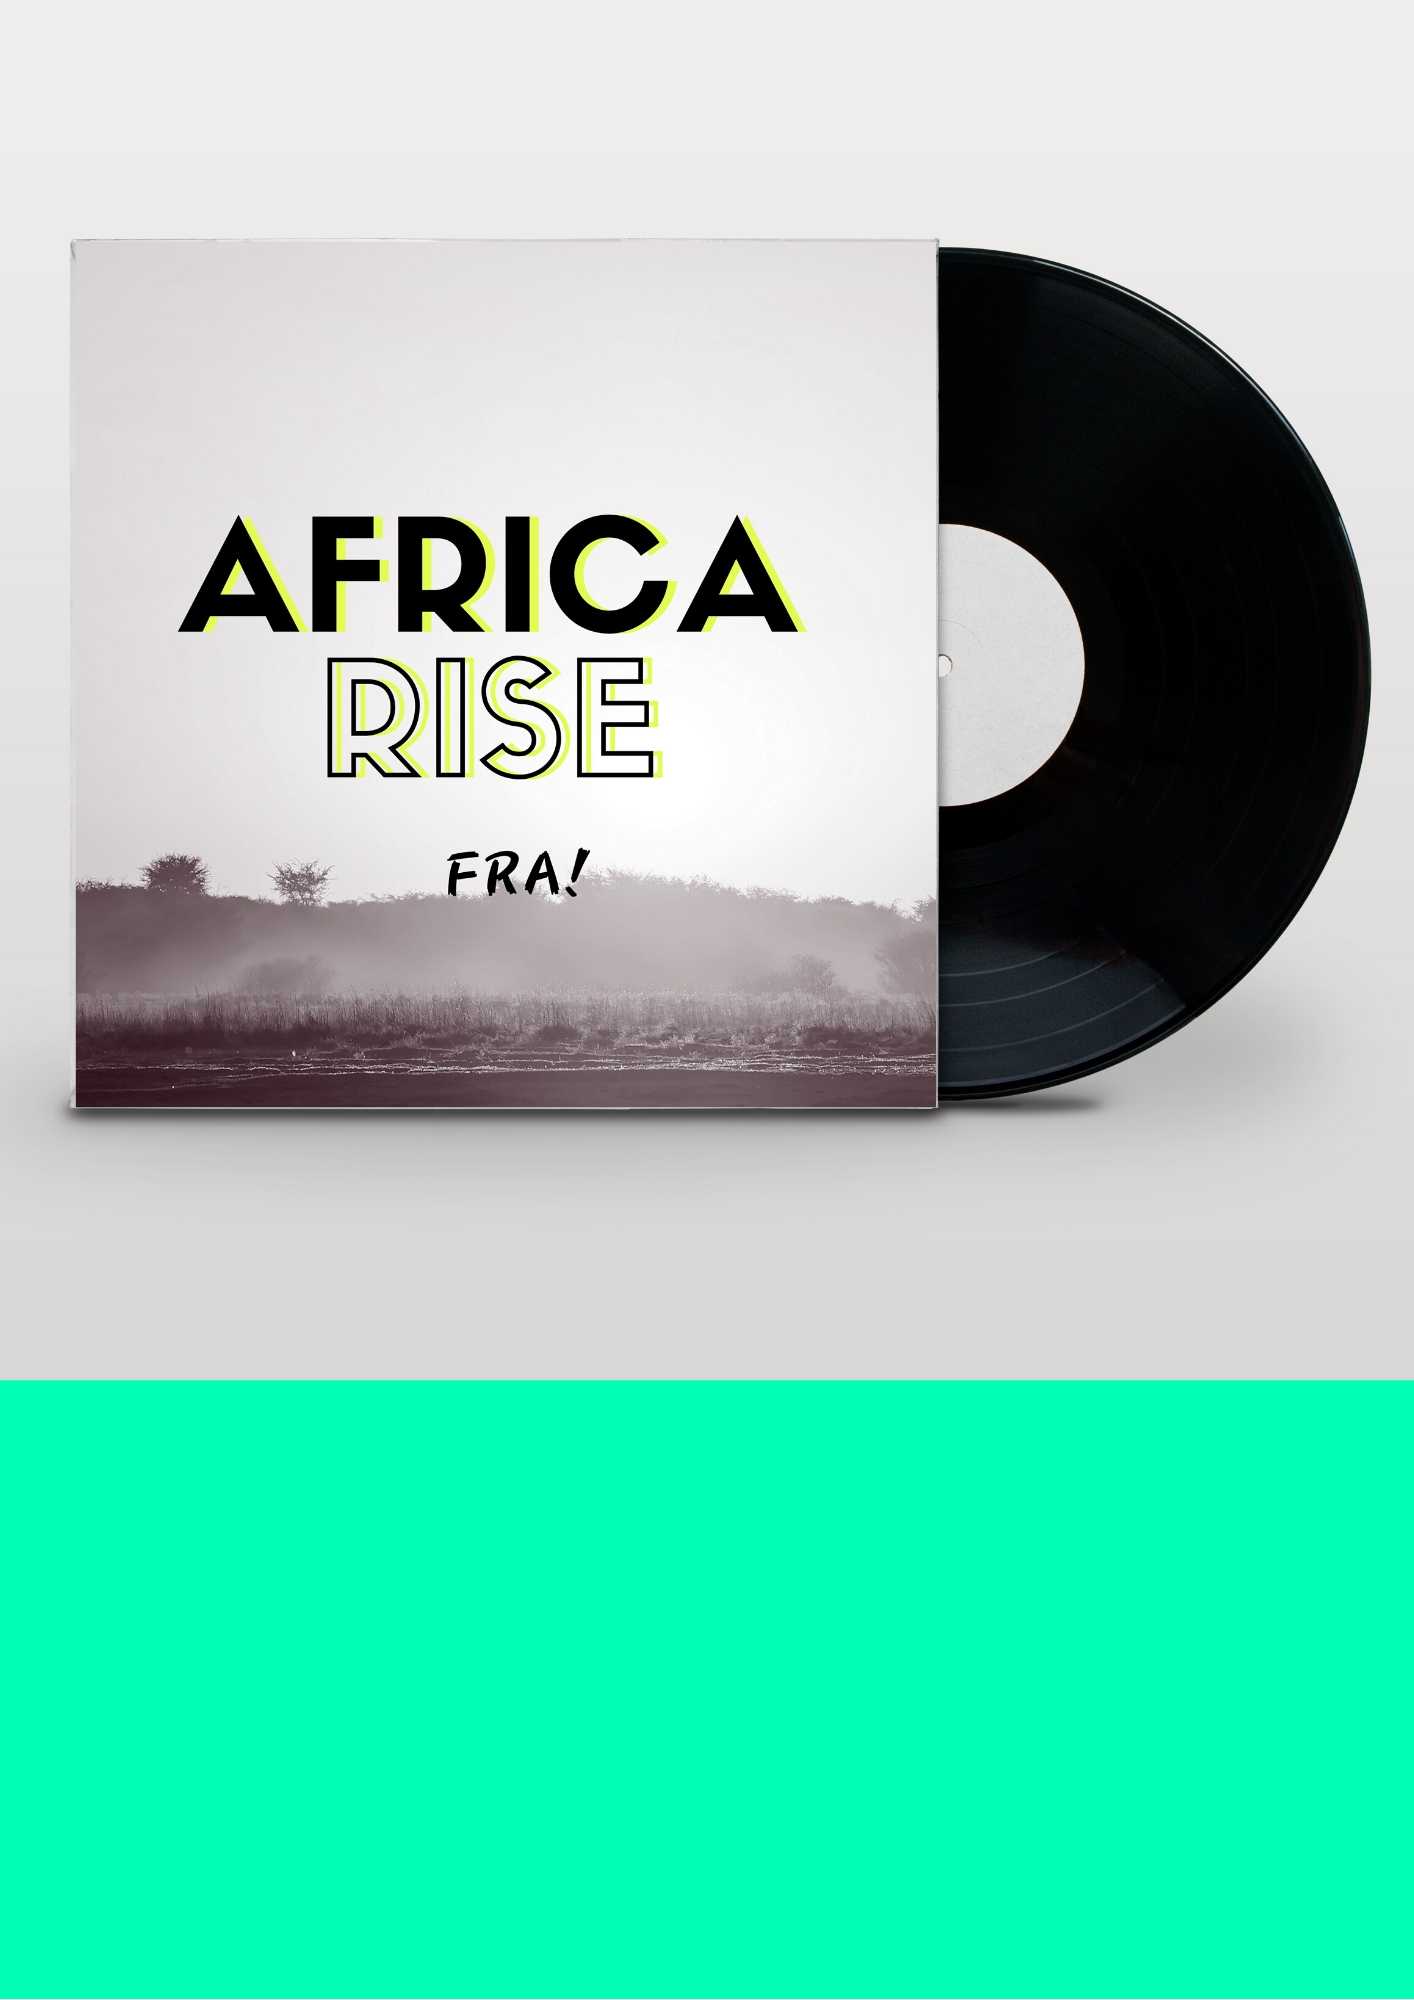 AFRICA RISE by FRA! for #SOULIDARITY